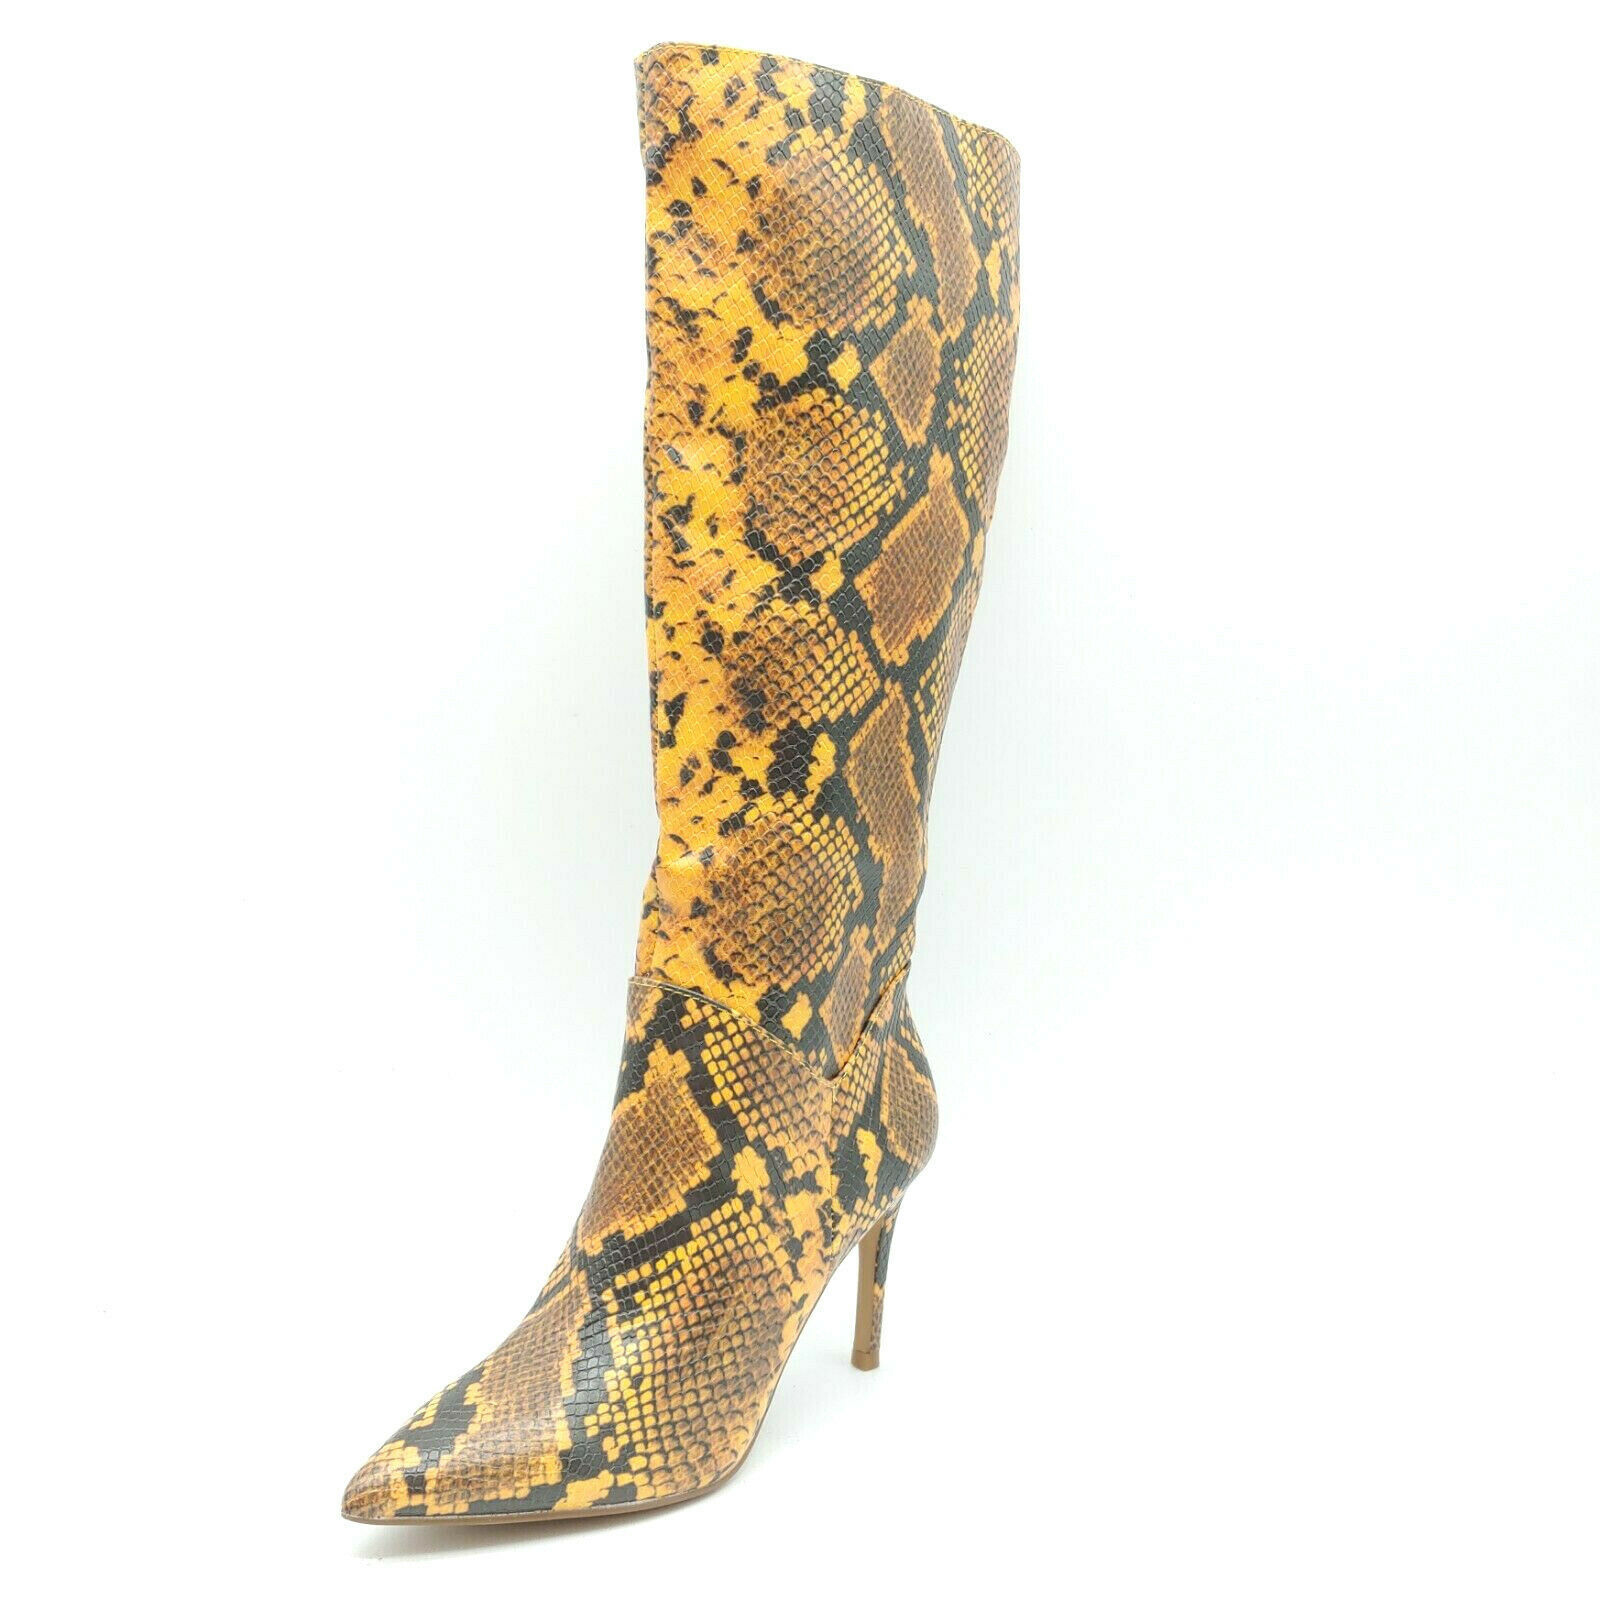 Steve Madden Womens Kinga Tall Fashion Boot Gold Black Snake Skin  Sz 6M NEW - $37.99